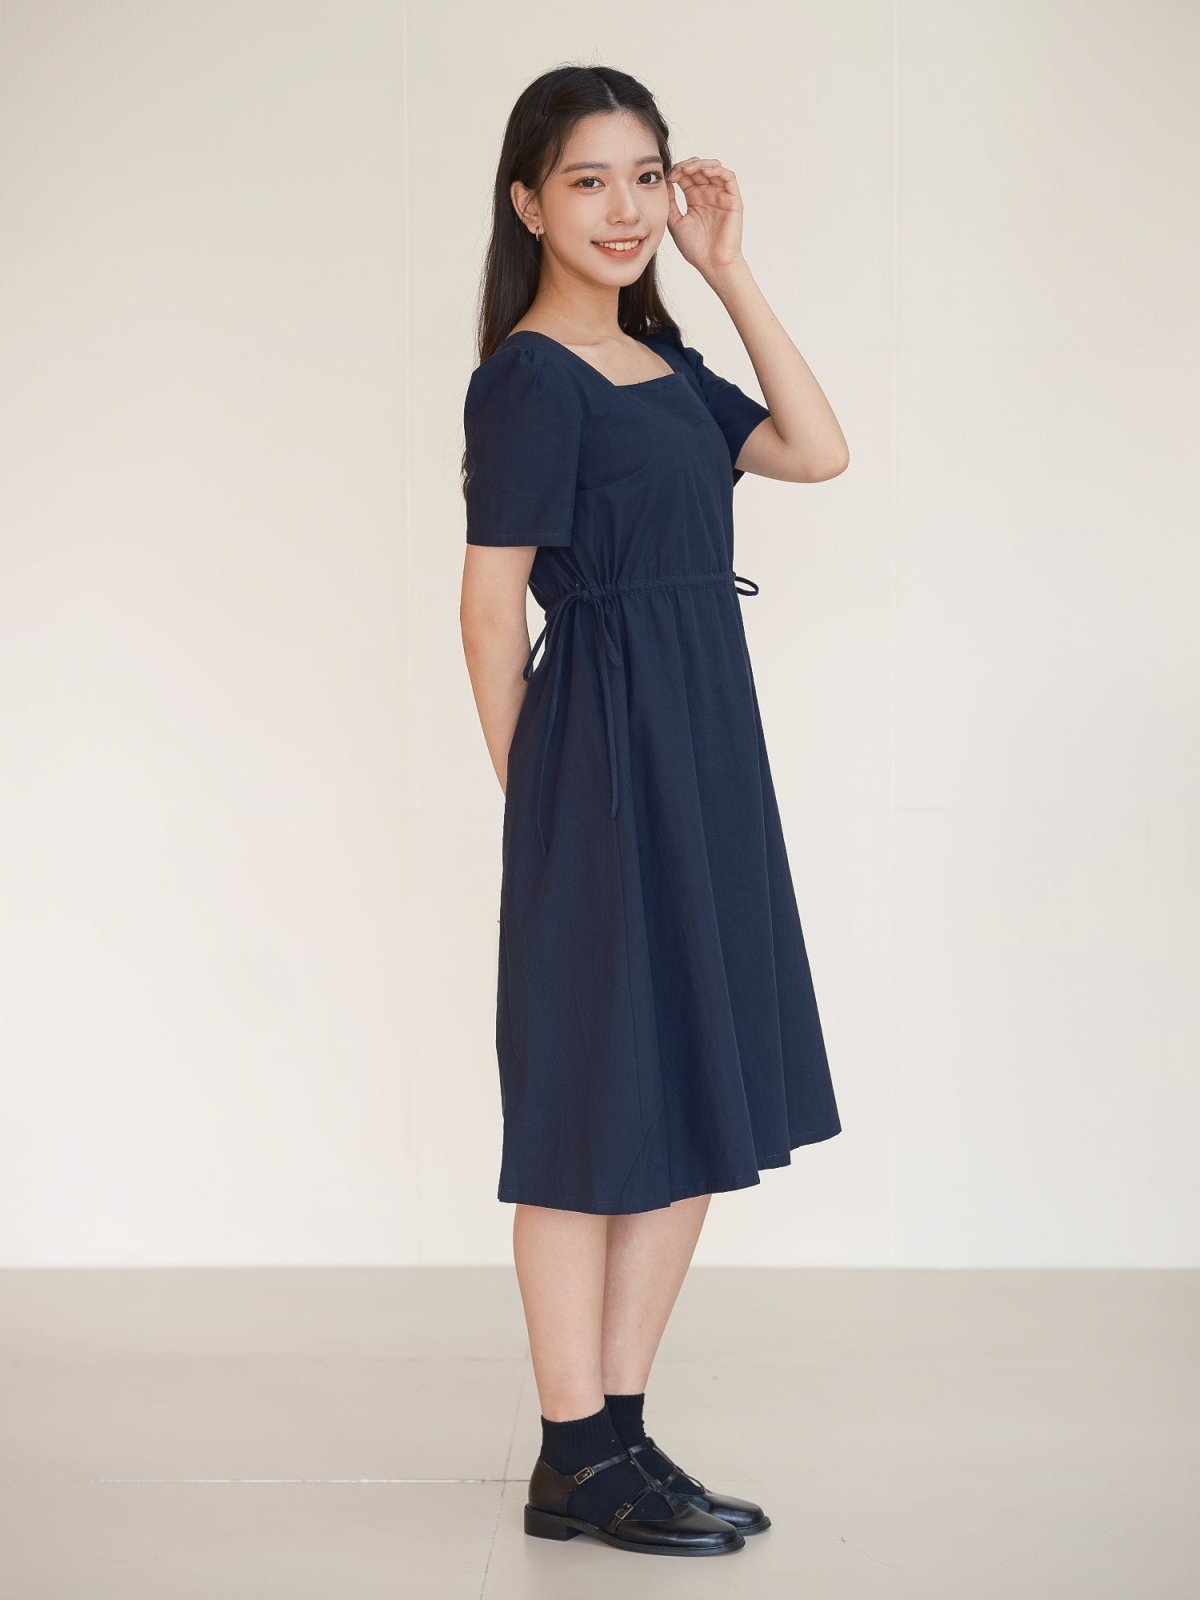 Kina Two-Way Square Neck Midi Dress - DAG-DD8470-21NavyS - Navy Blue - S - D'zage Designs